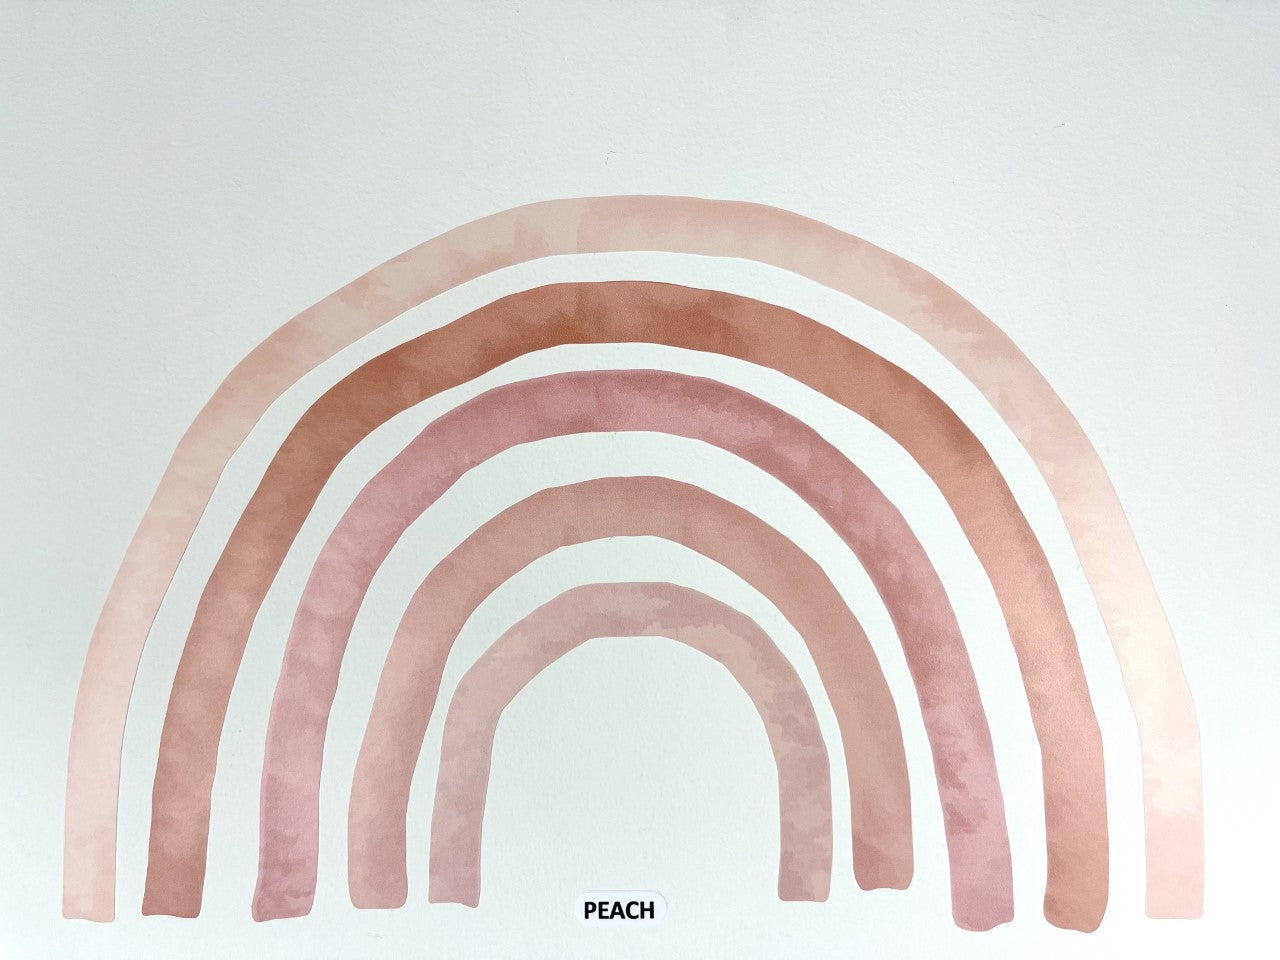 Swatch image of Peach rainbow